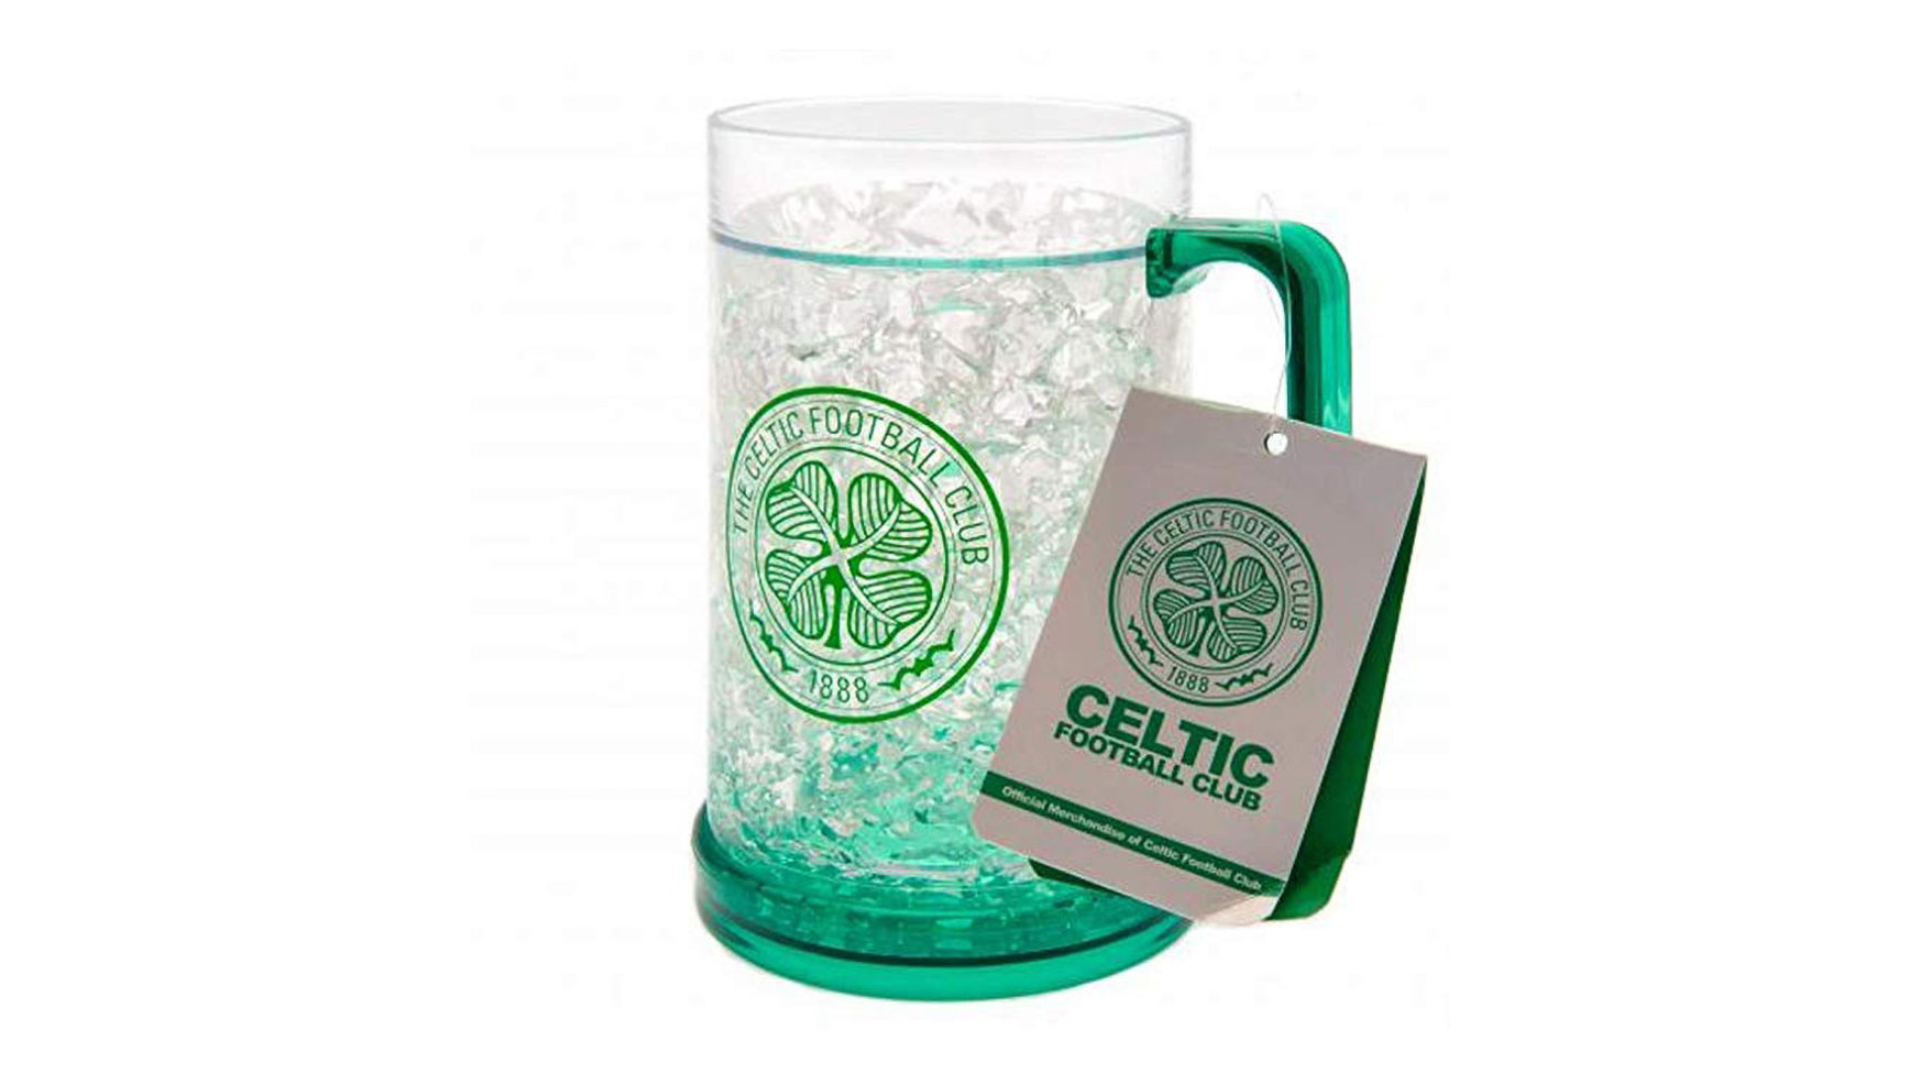 Celtic FC 2pk Shot Glass Set  Official Football Merchandise.com